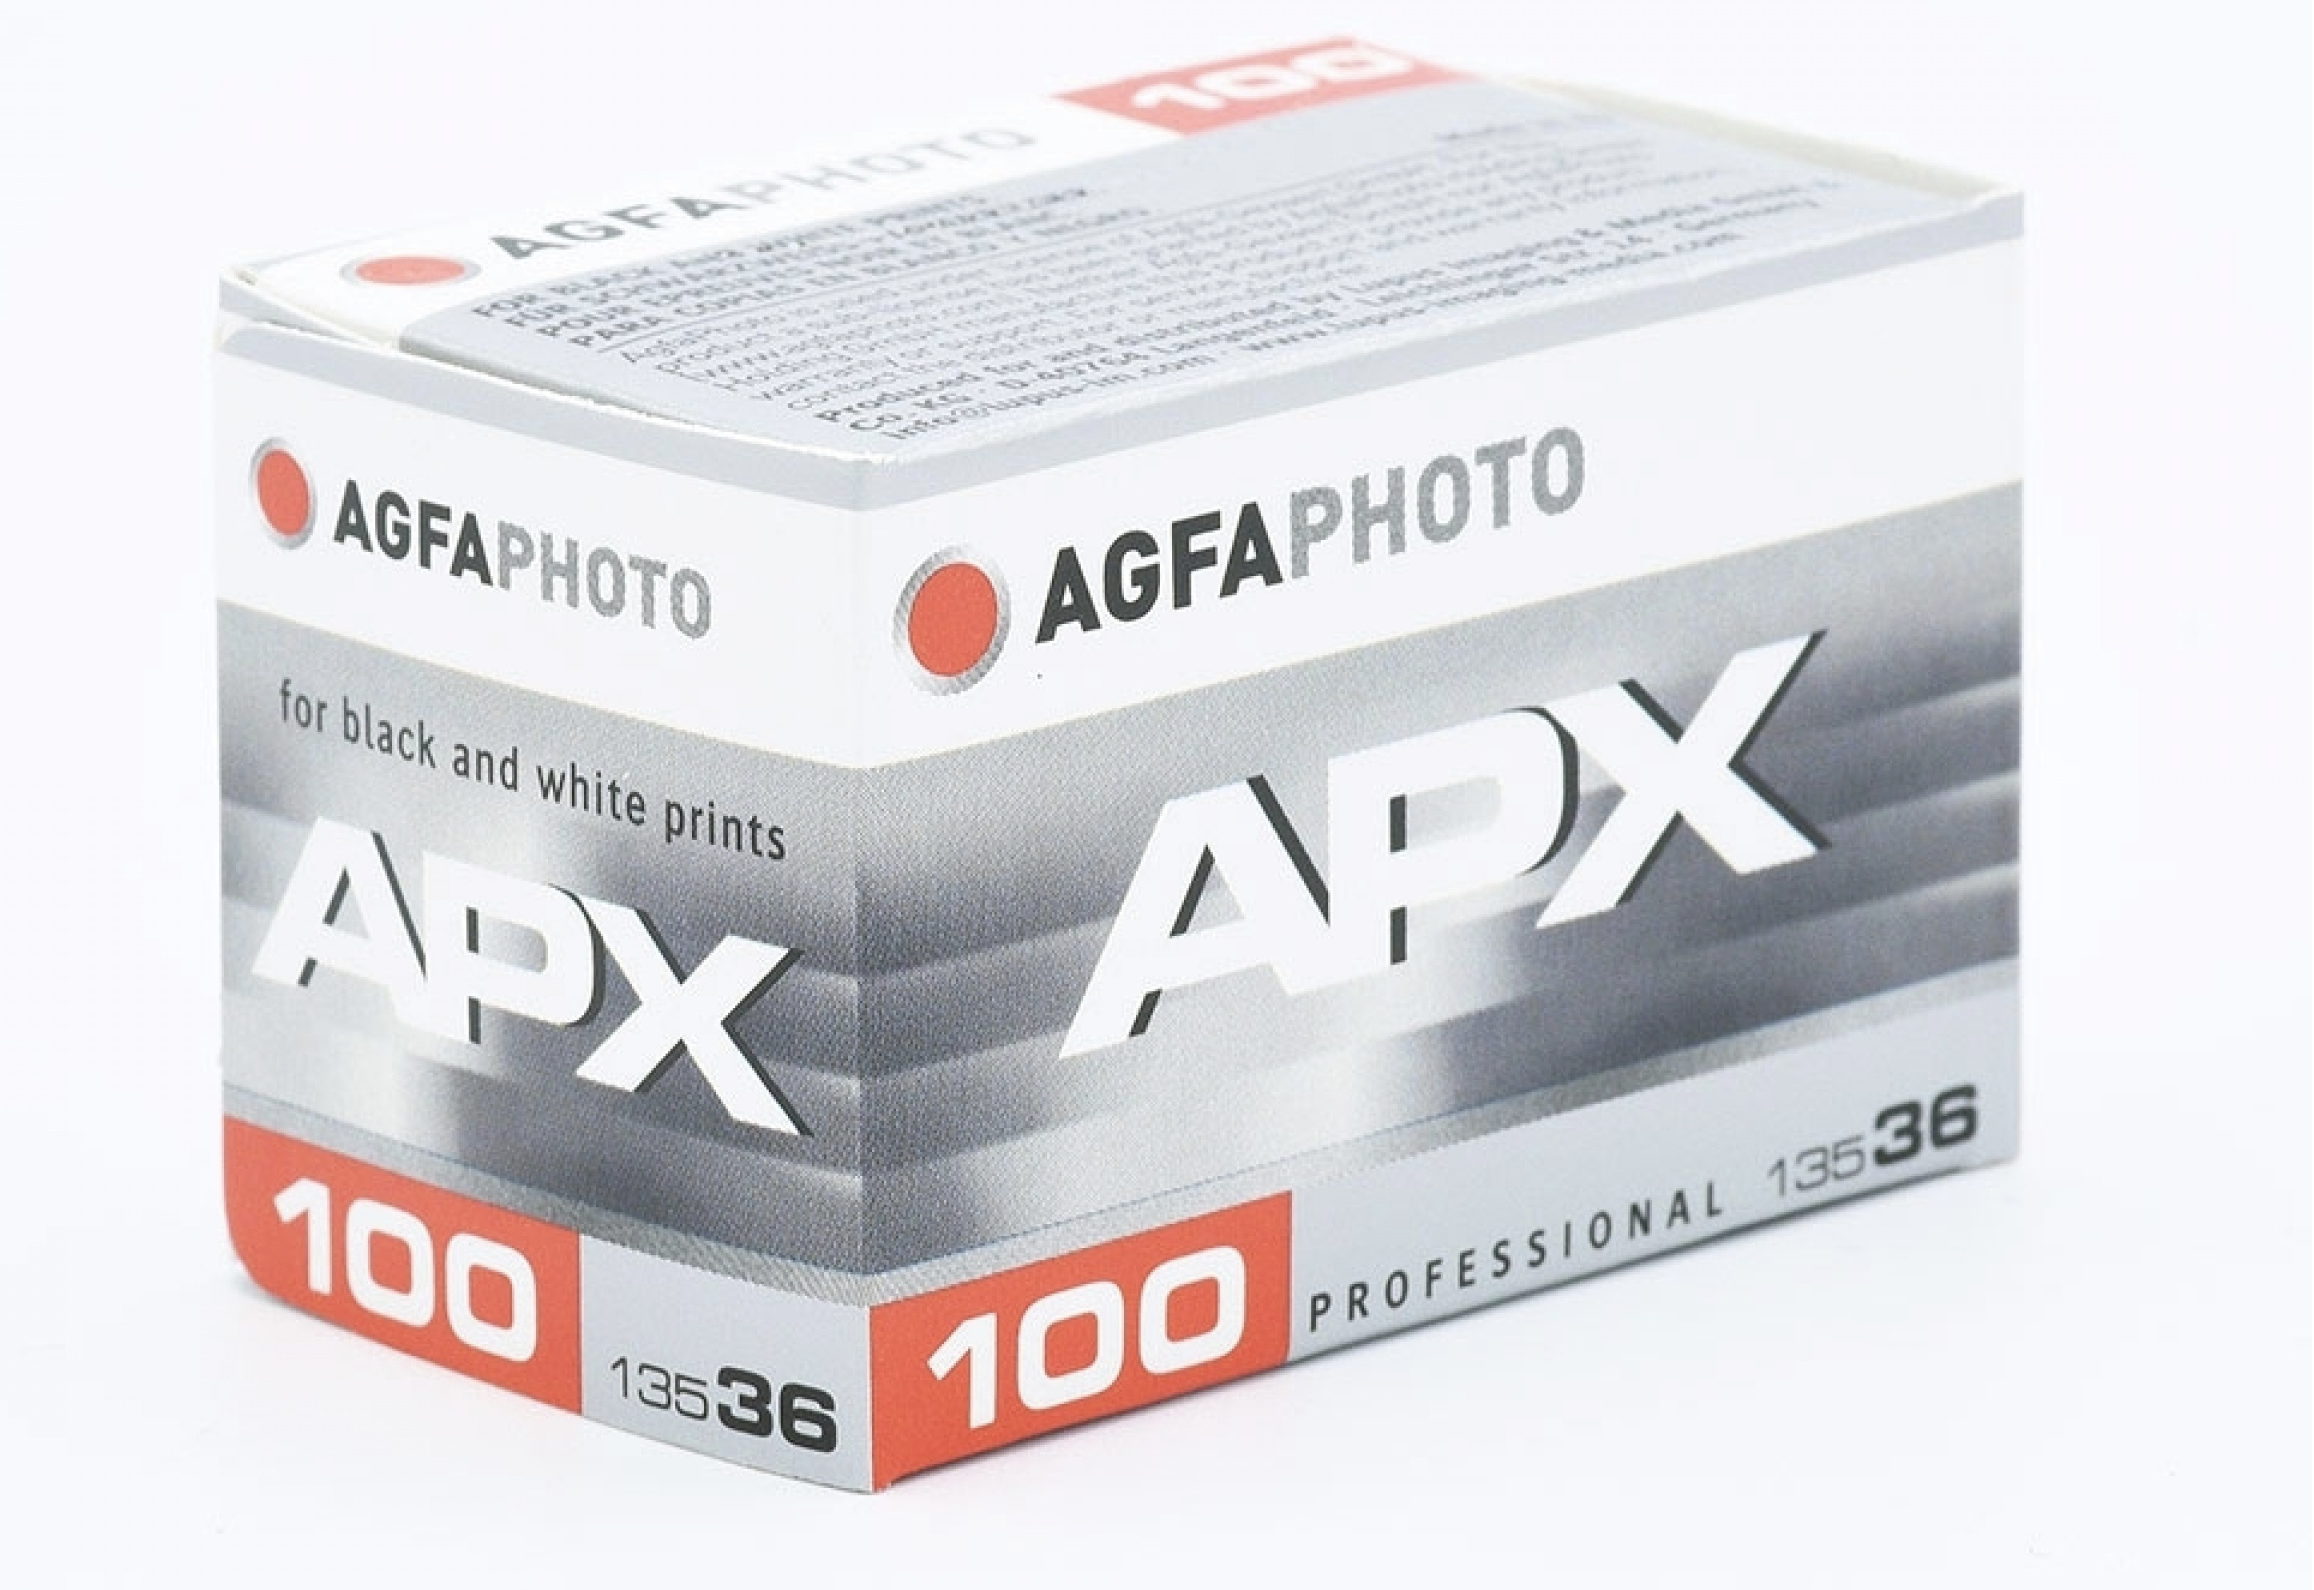 Agfa APX 100-36